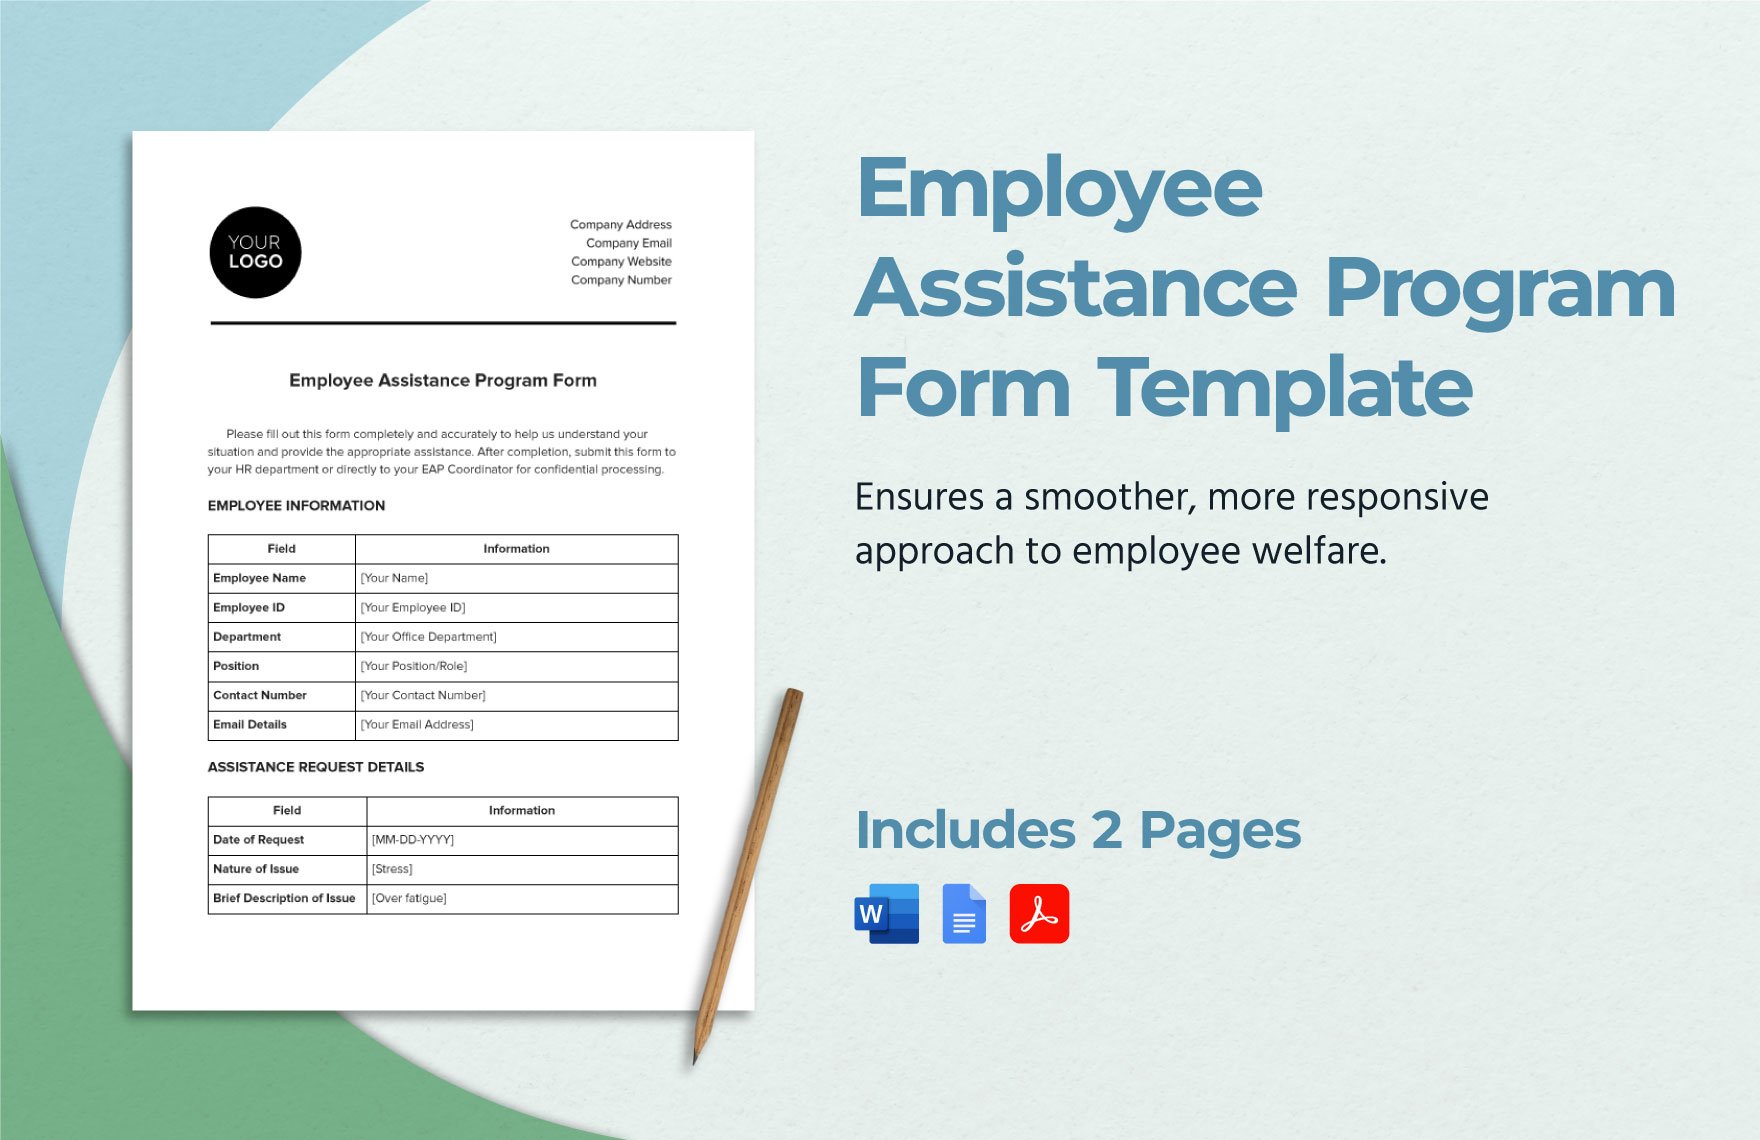 Employee Assistance Program Form Template